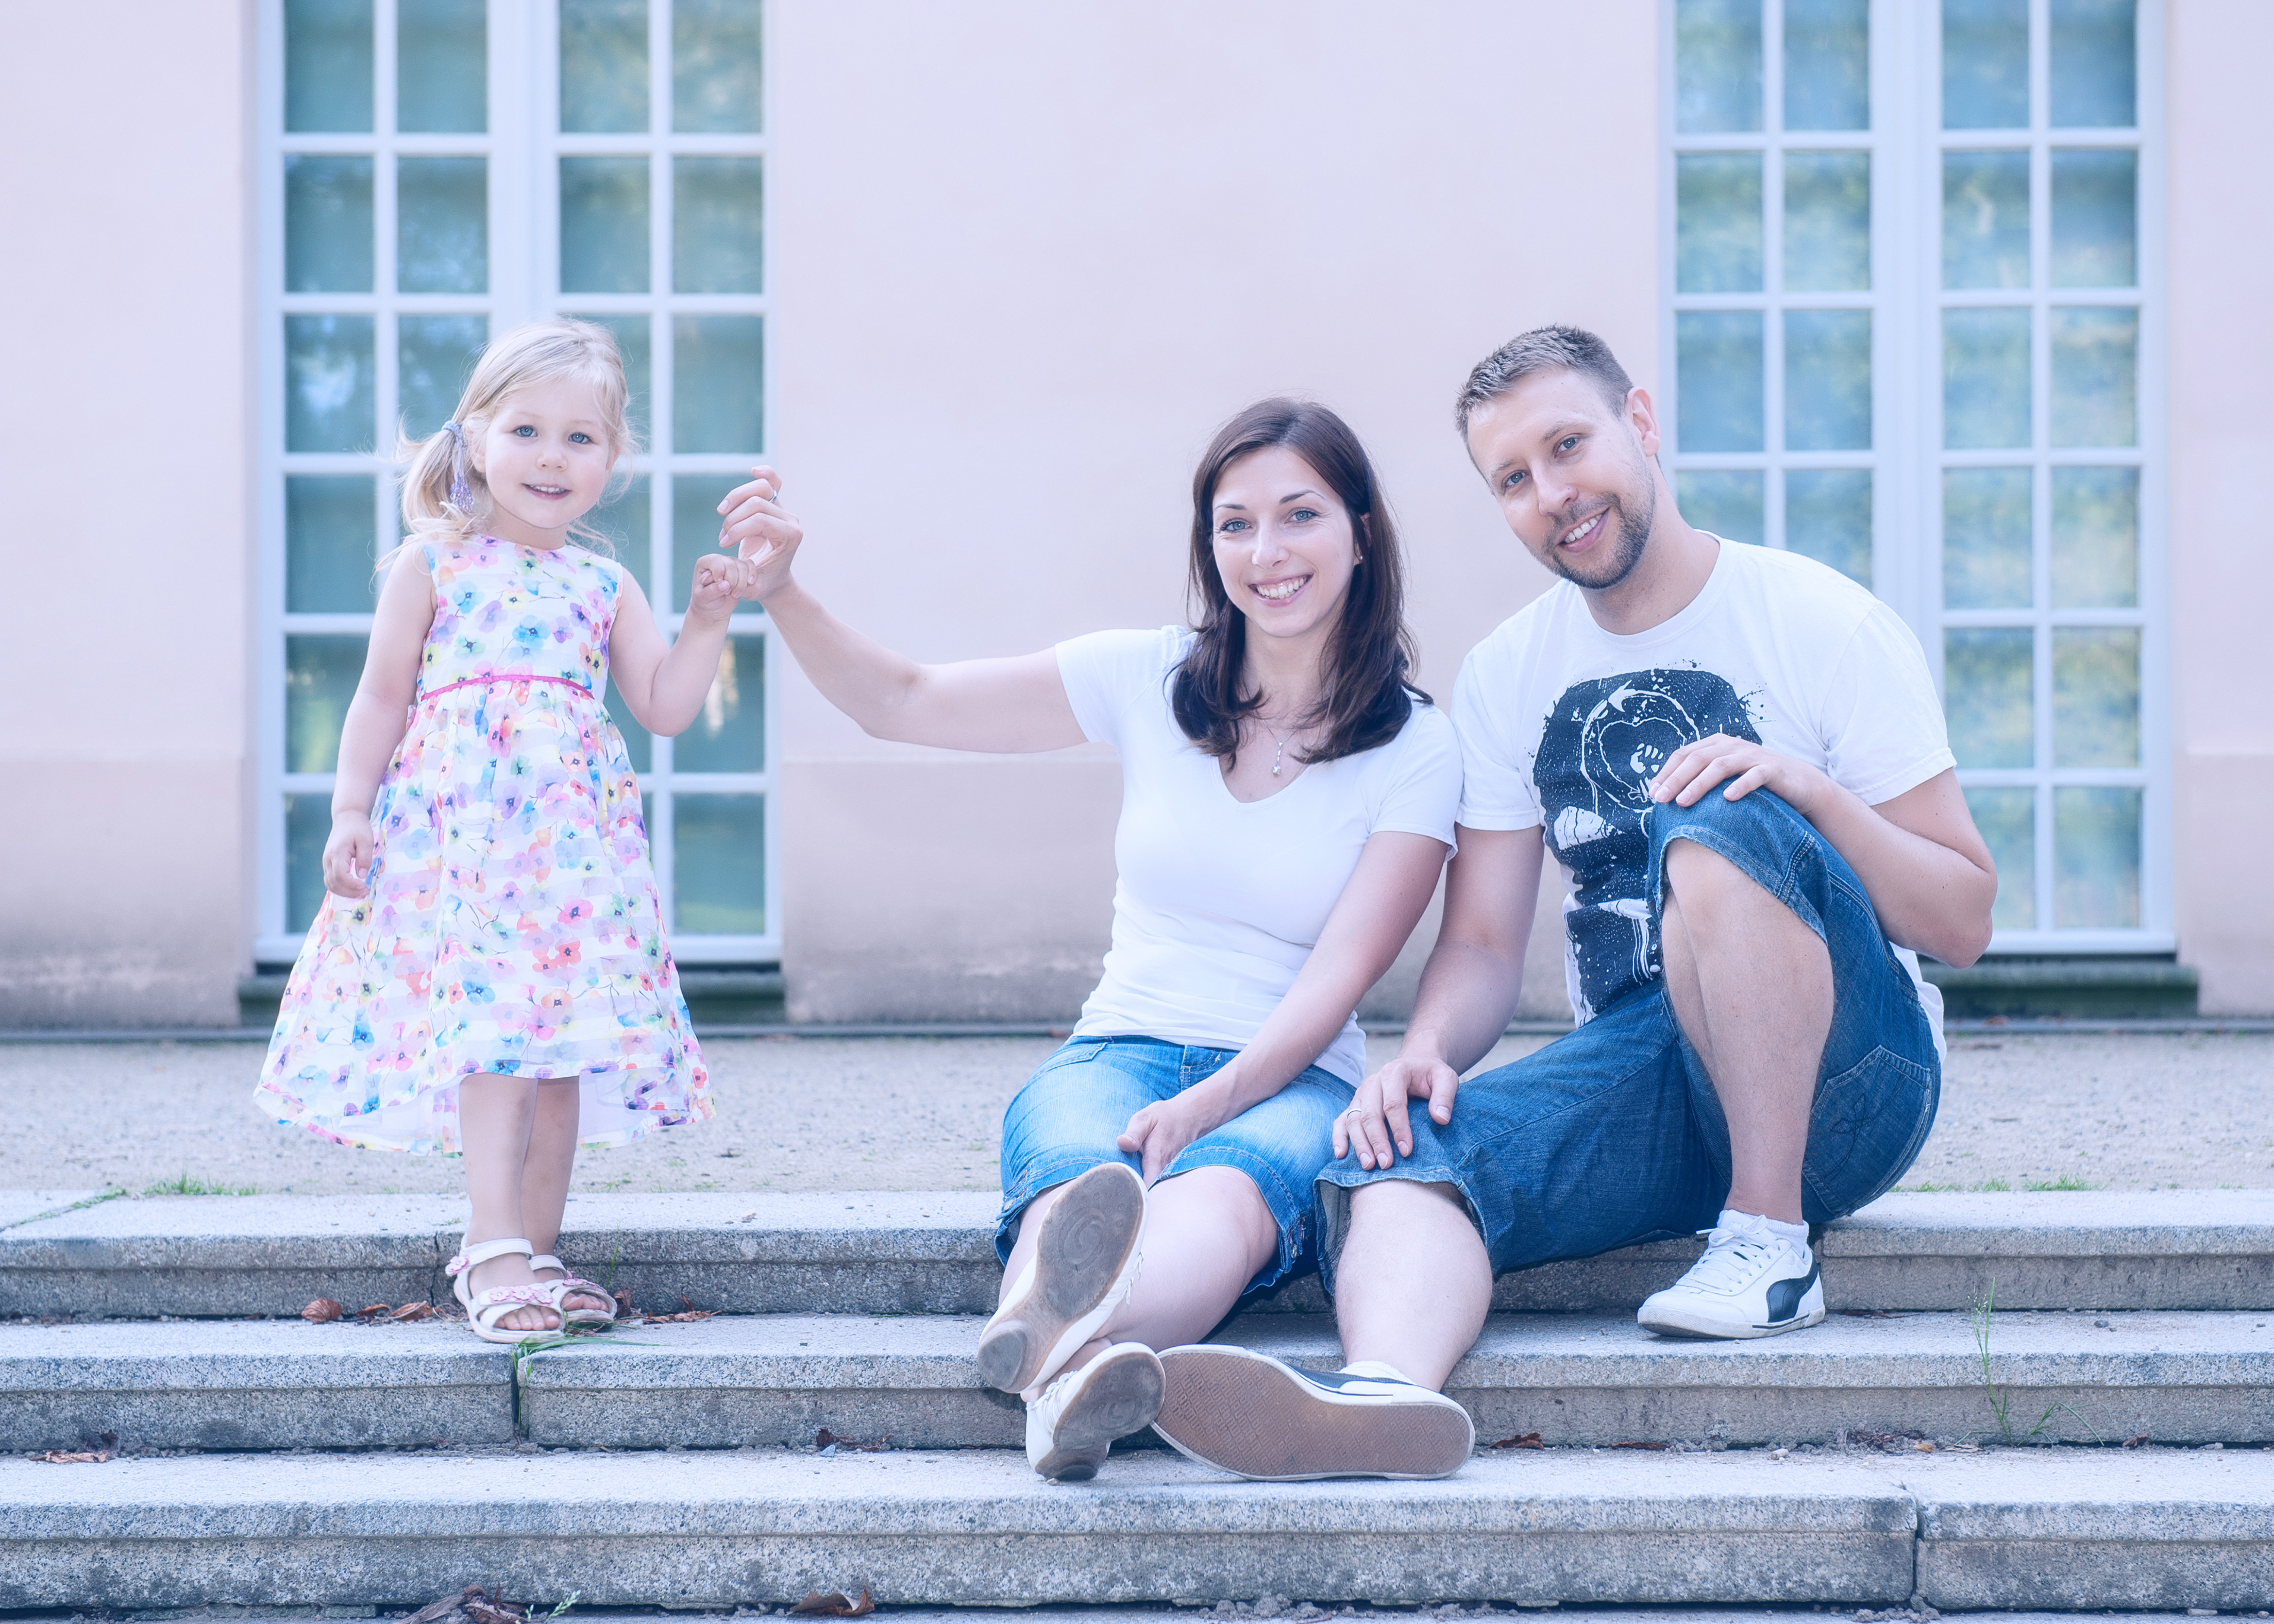 Familienfotos an Ihrem Lieblingsplatz in Berlin Pankow machen lassen